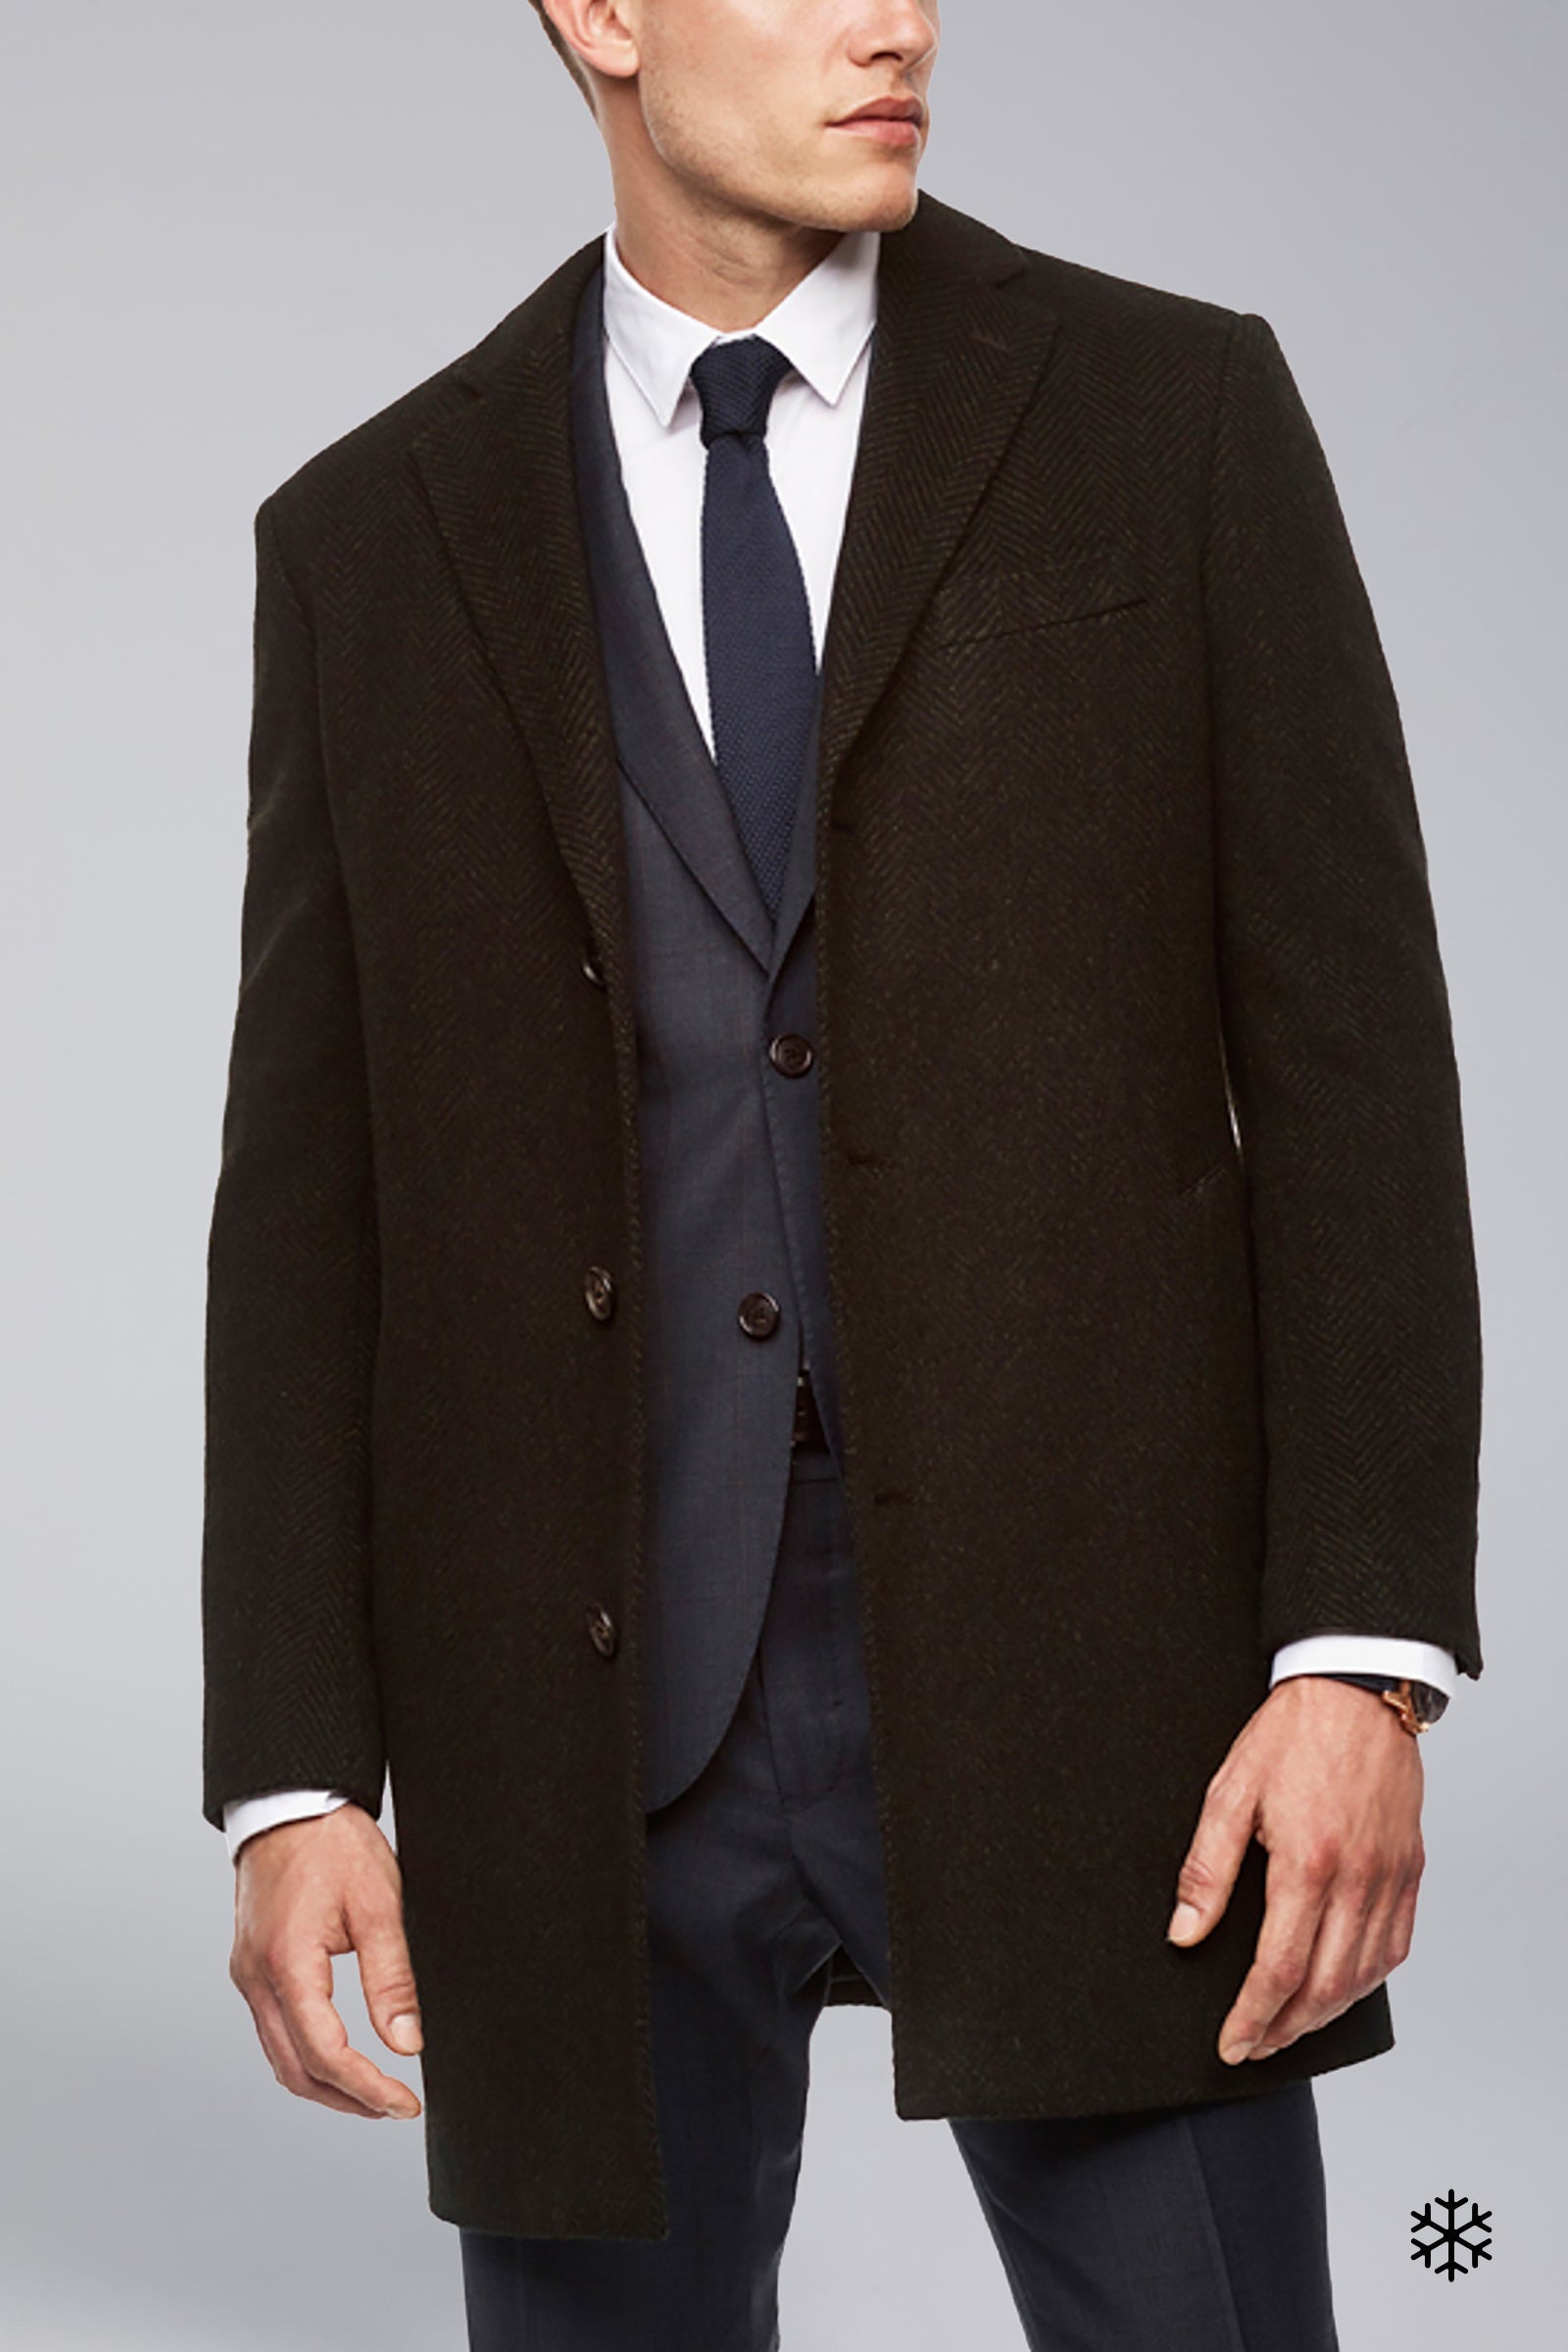 Stone Slim Fit Wool & Cashmere Overcoat - Navy-Olive Herringbone